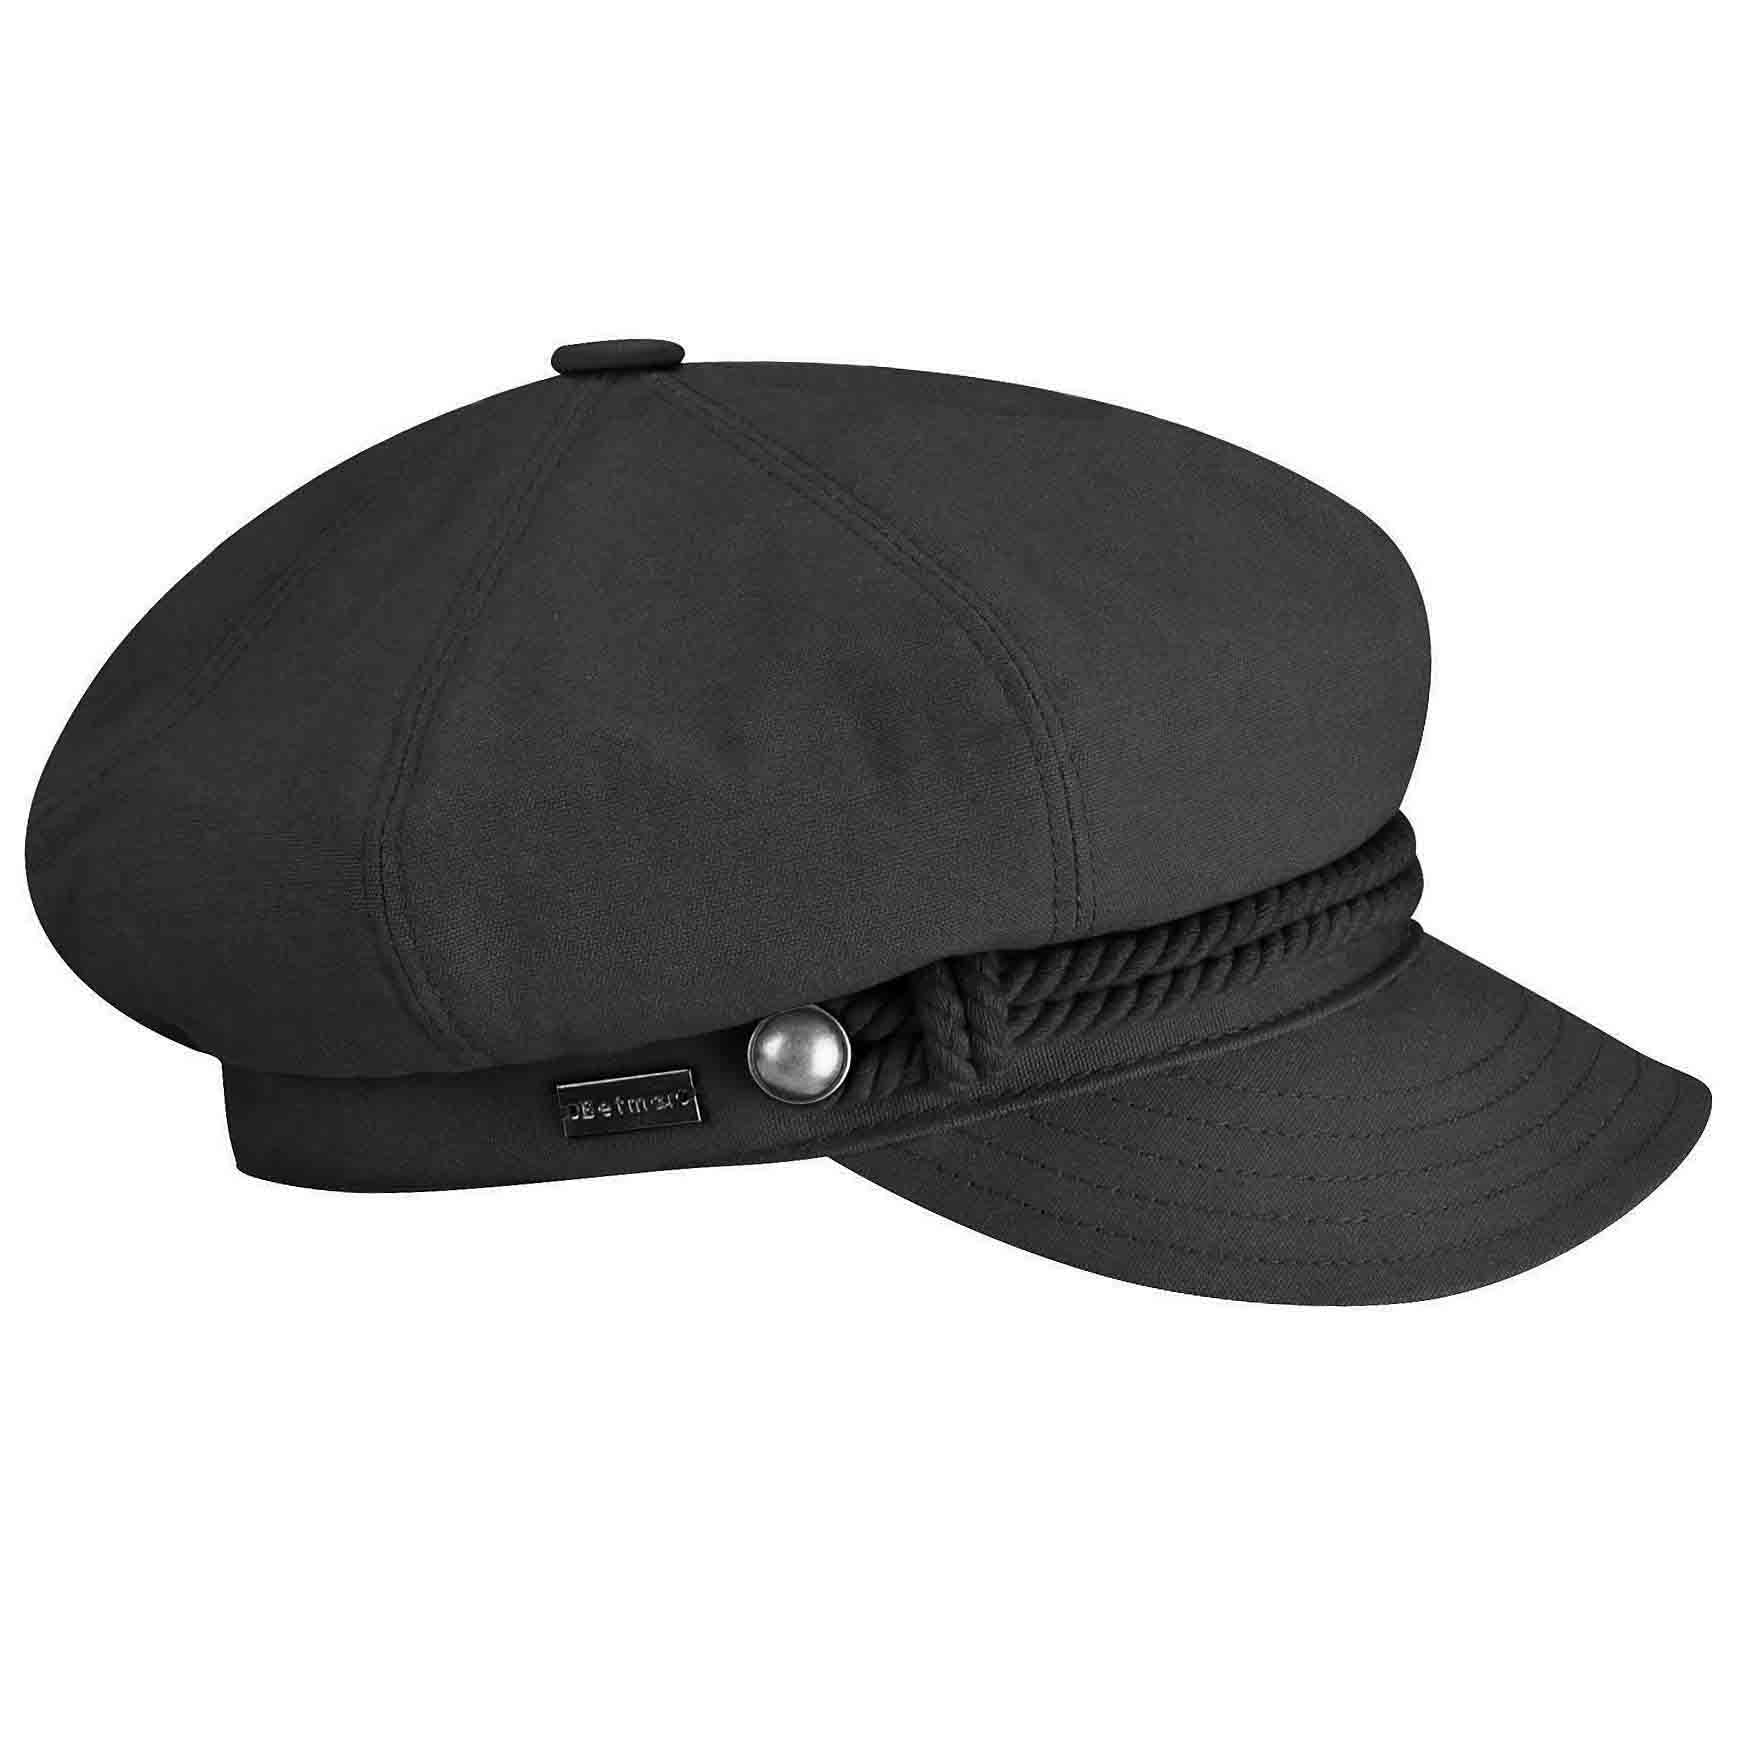 India Vague Classic כובע קסקט לנשים דייגים בטמר בצבע שחור1 - כובעלה כובעי מותג לגברים ונשים